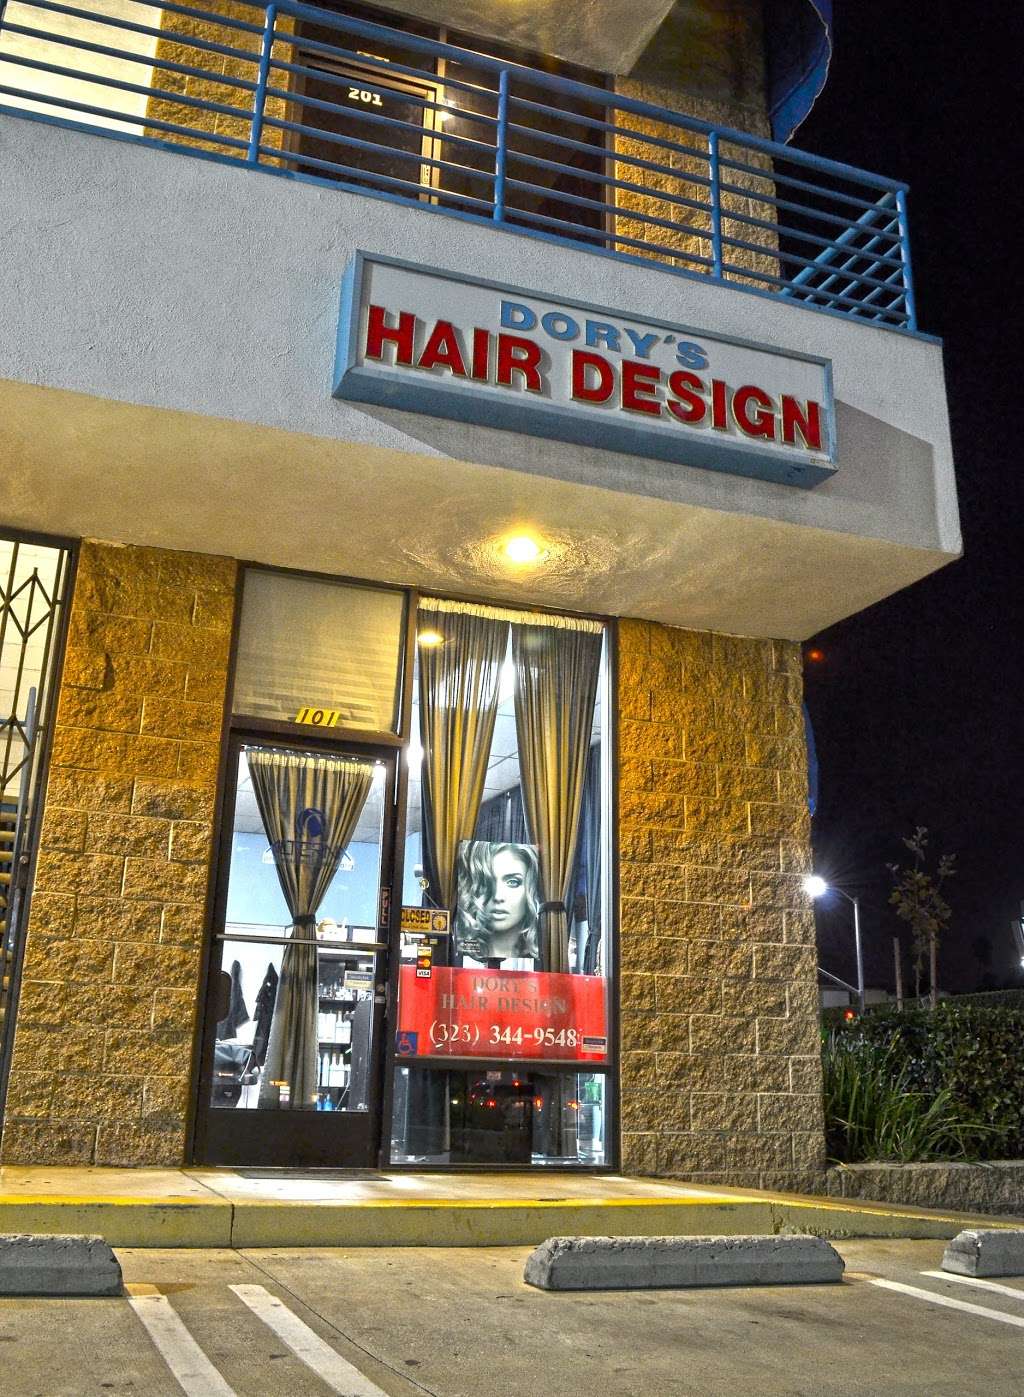 Dorys Hair Design | 2161 Colorado Blvd #101, Los Angeles, CA 90041, USA | Phone: (323) 344-9548